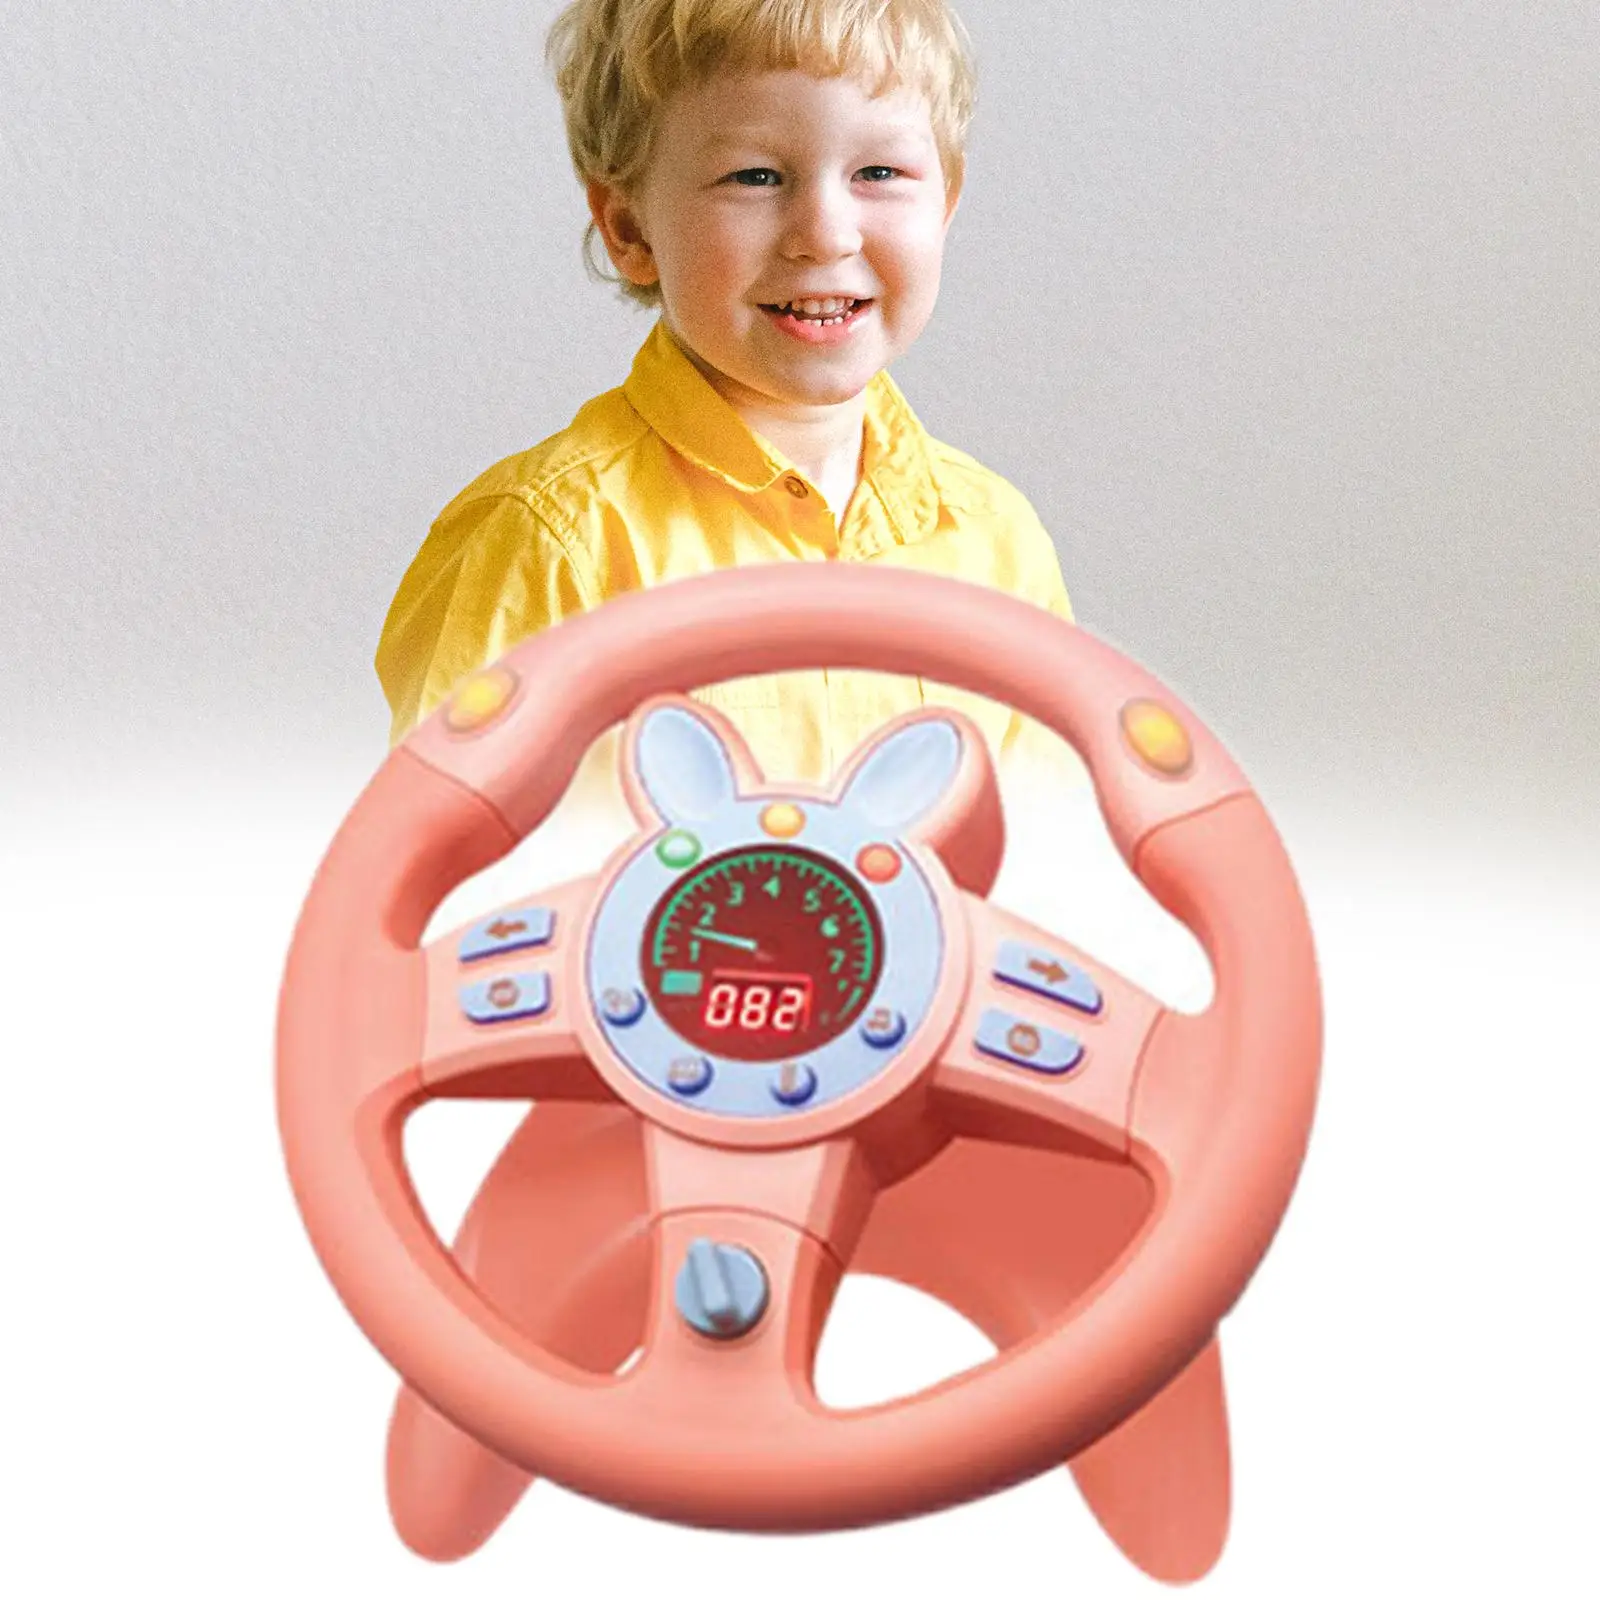 Steering Wheel Toys Digital Kilometer Pretend Driving Toy Early Education